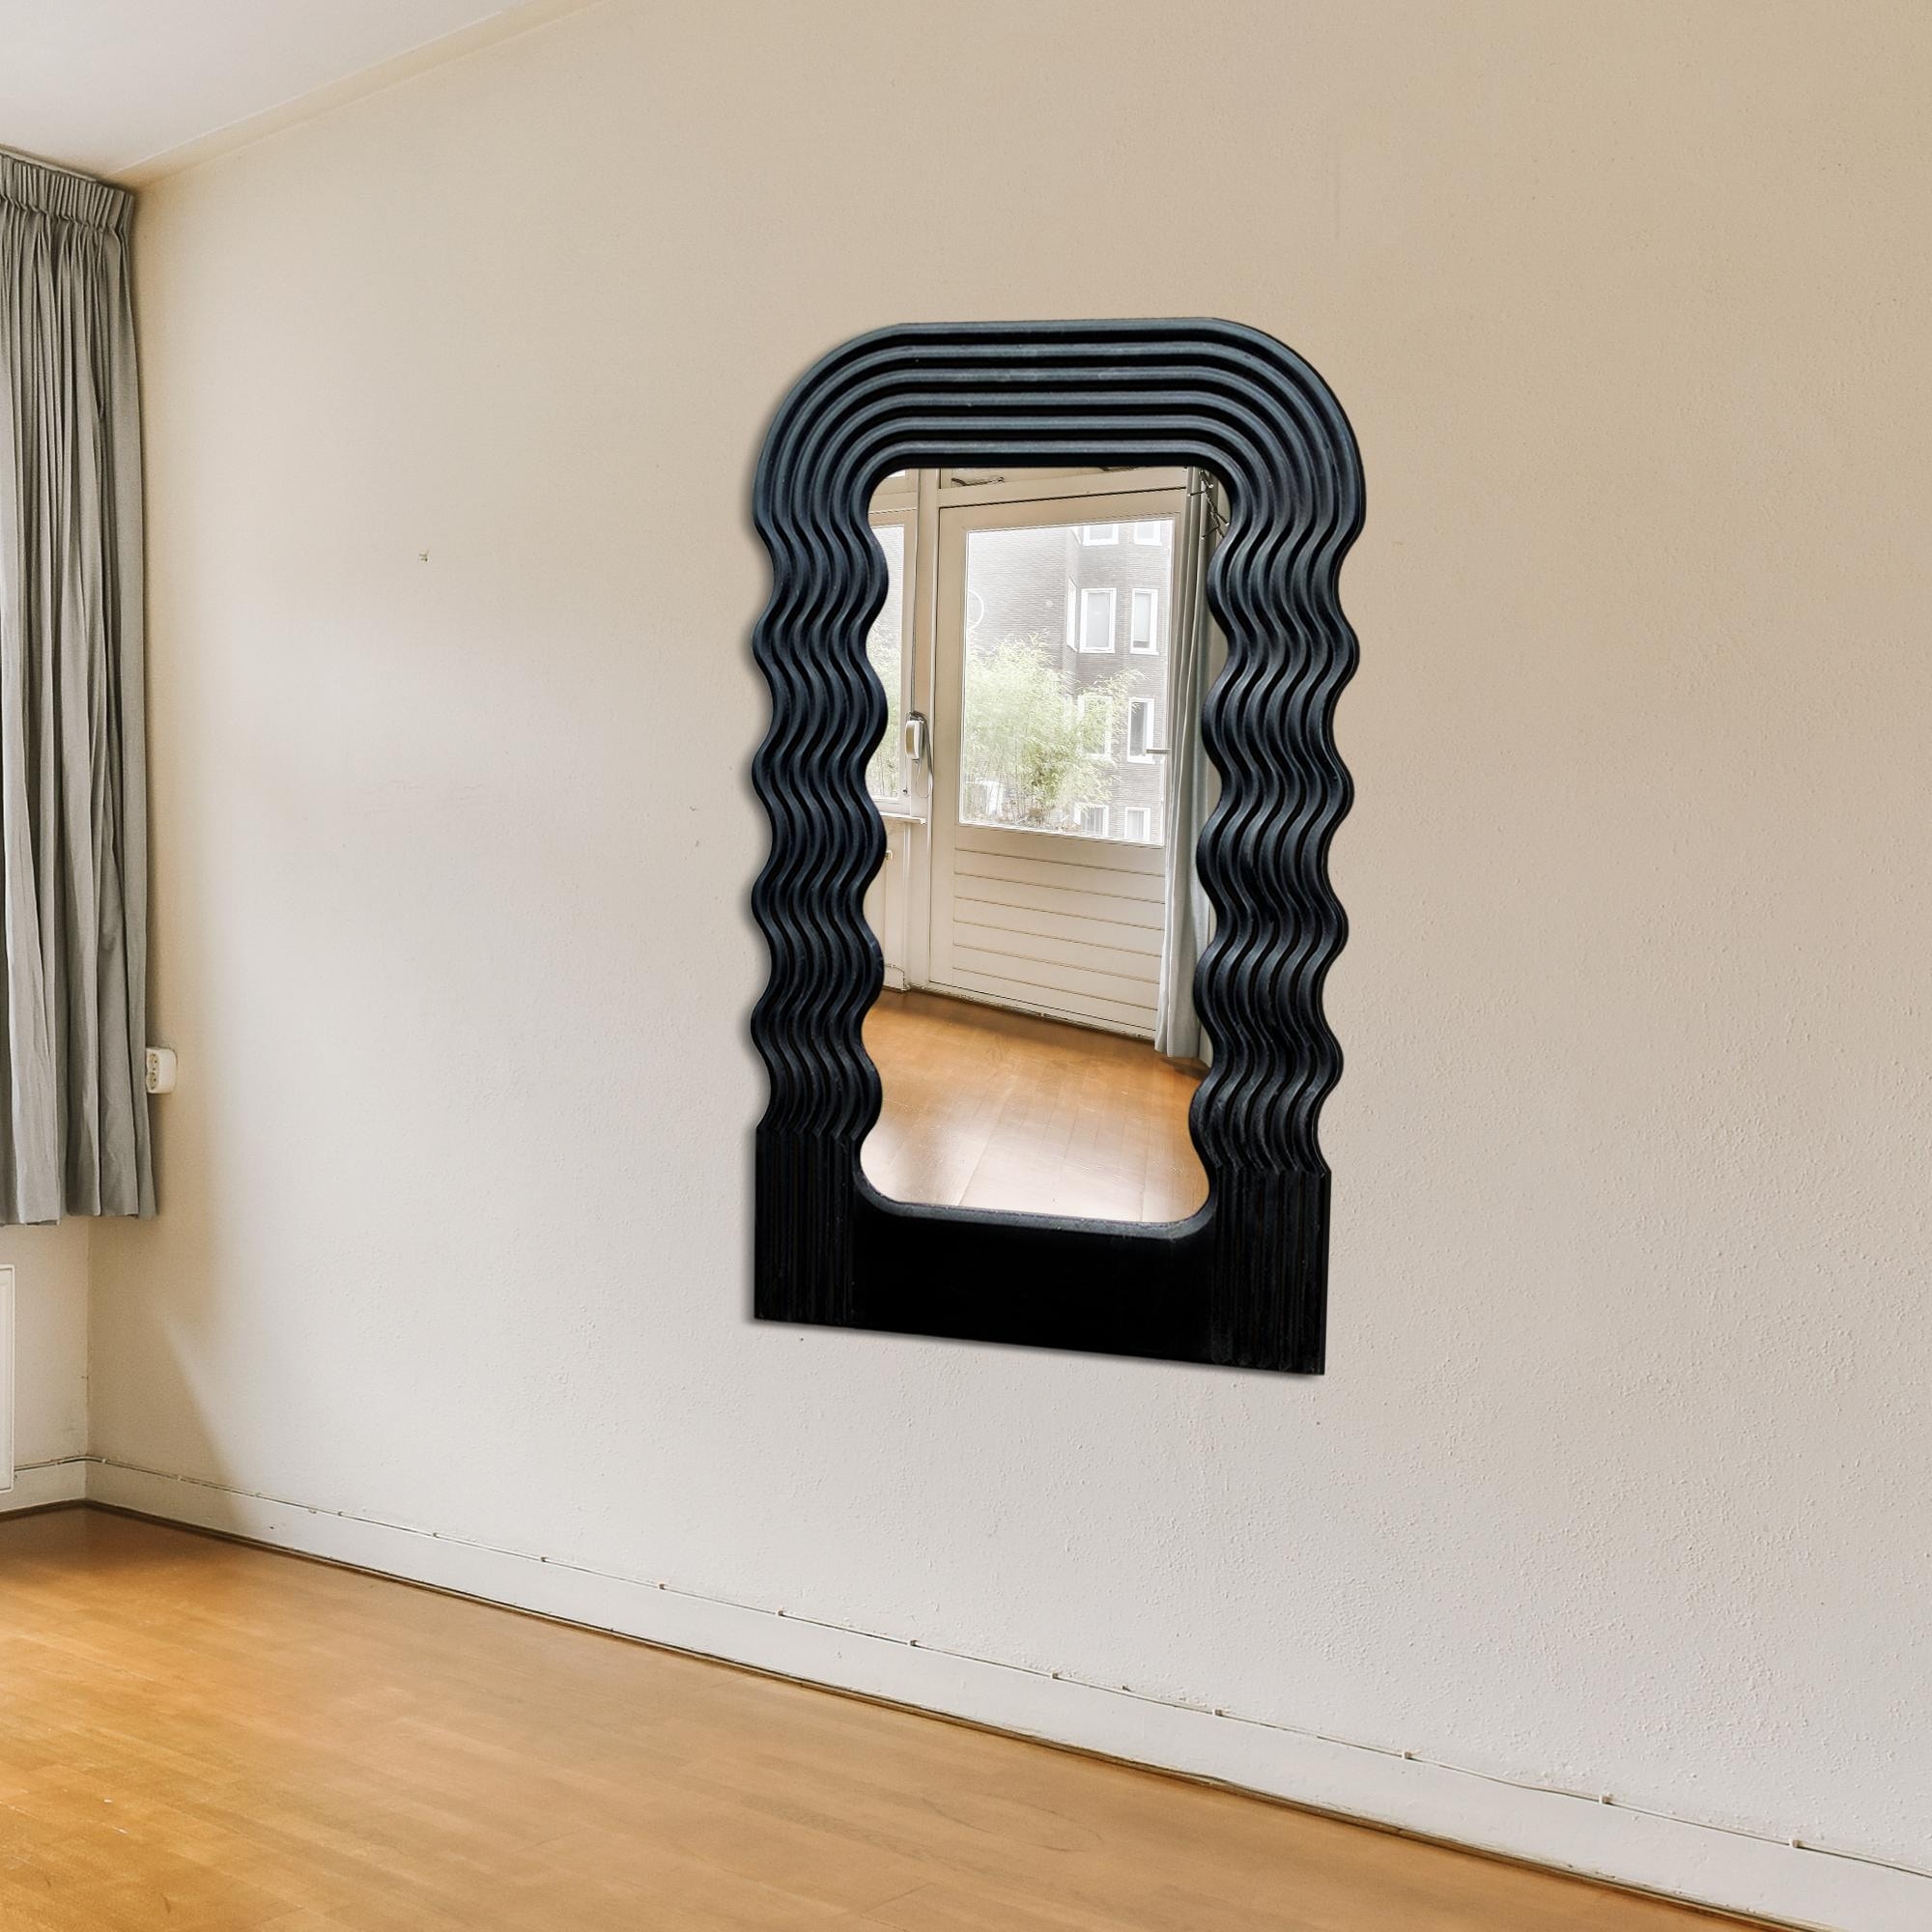 Asymmetrical Mirror, Decorative Irregular Mirror, Modern Aesthetic Mirror  for Bathroom Vanity - 36 x 28 Inches - On Sale - Bed Bath & Beyond -  37476553